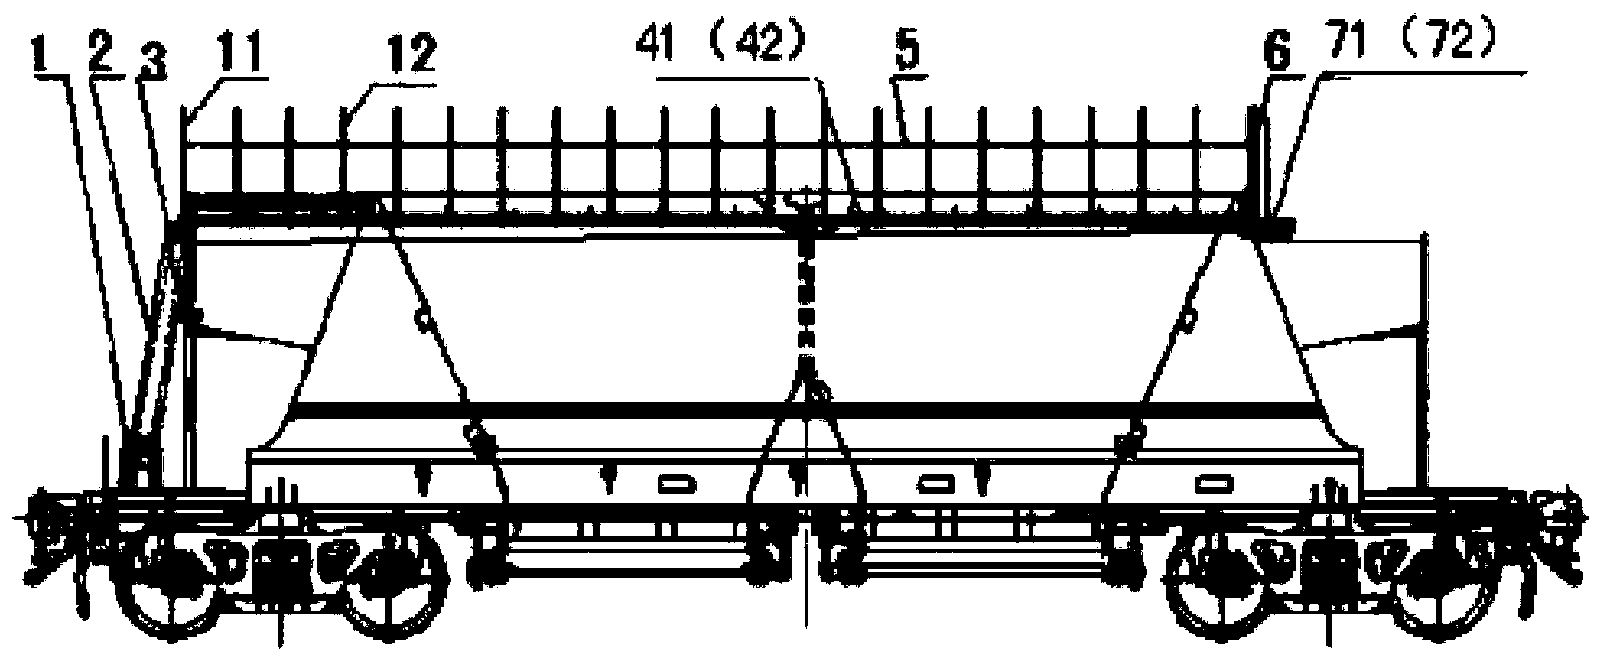 Canopy of railway wagon